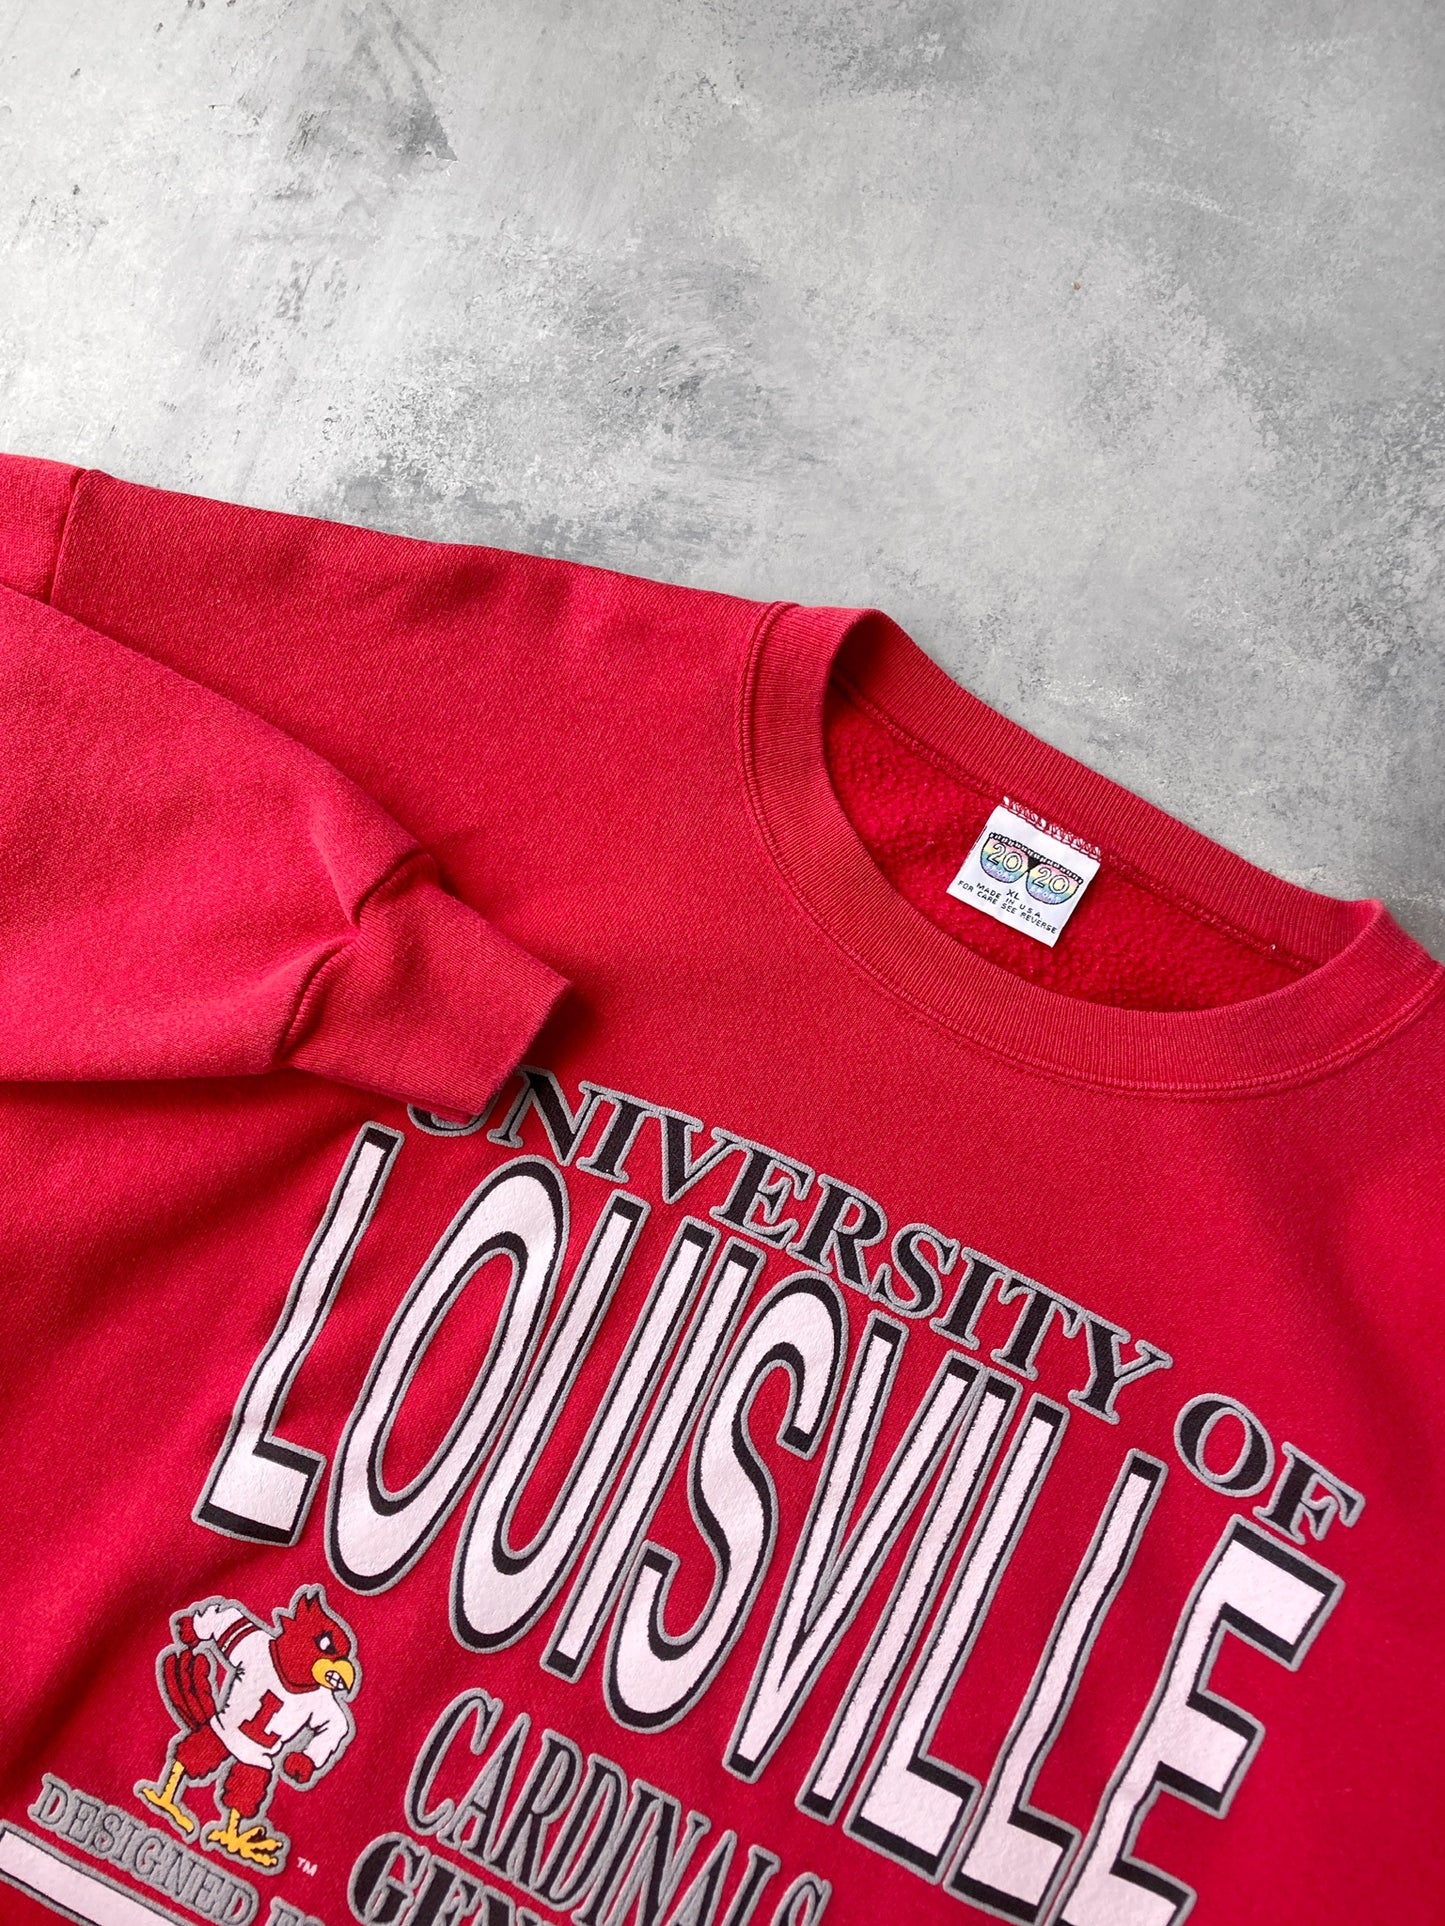 University of Louisville Crewneck 90's - Large / XL